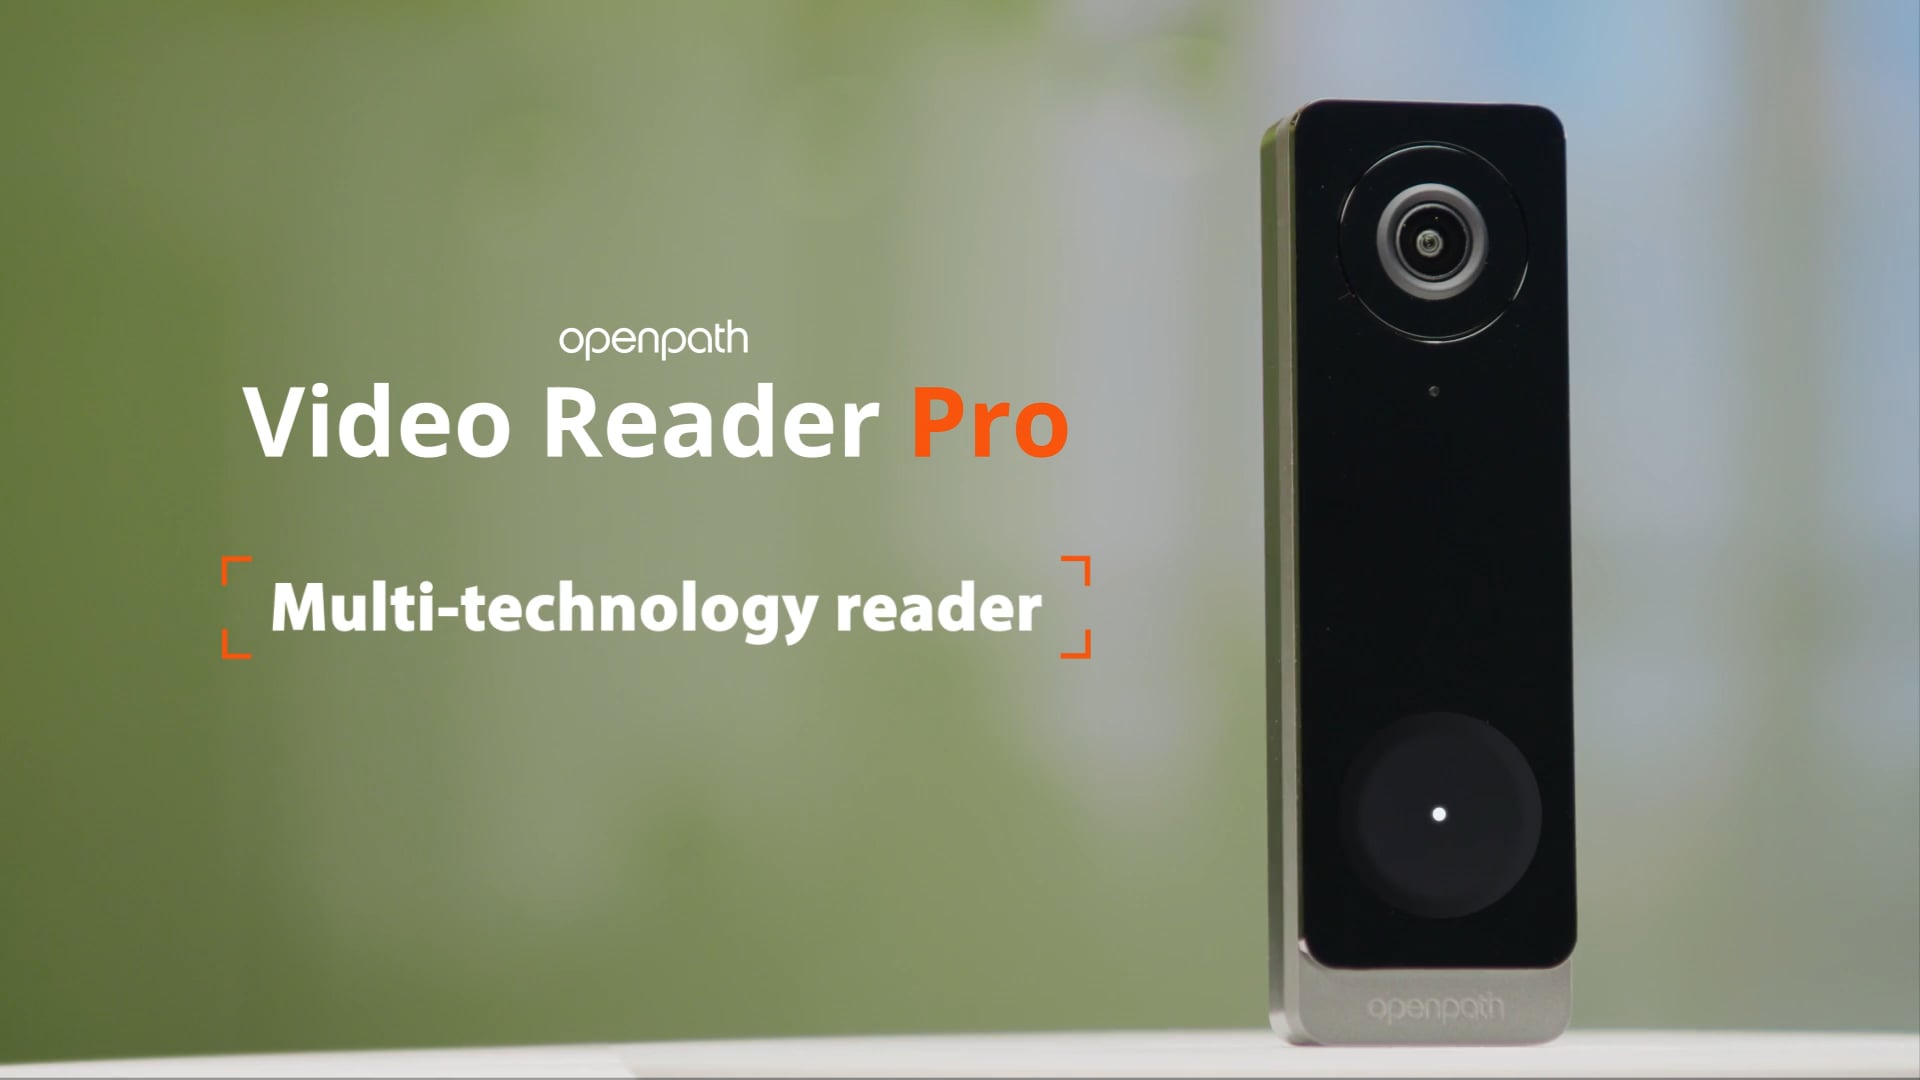 Openpath "Video Reader Pro"